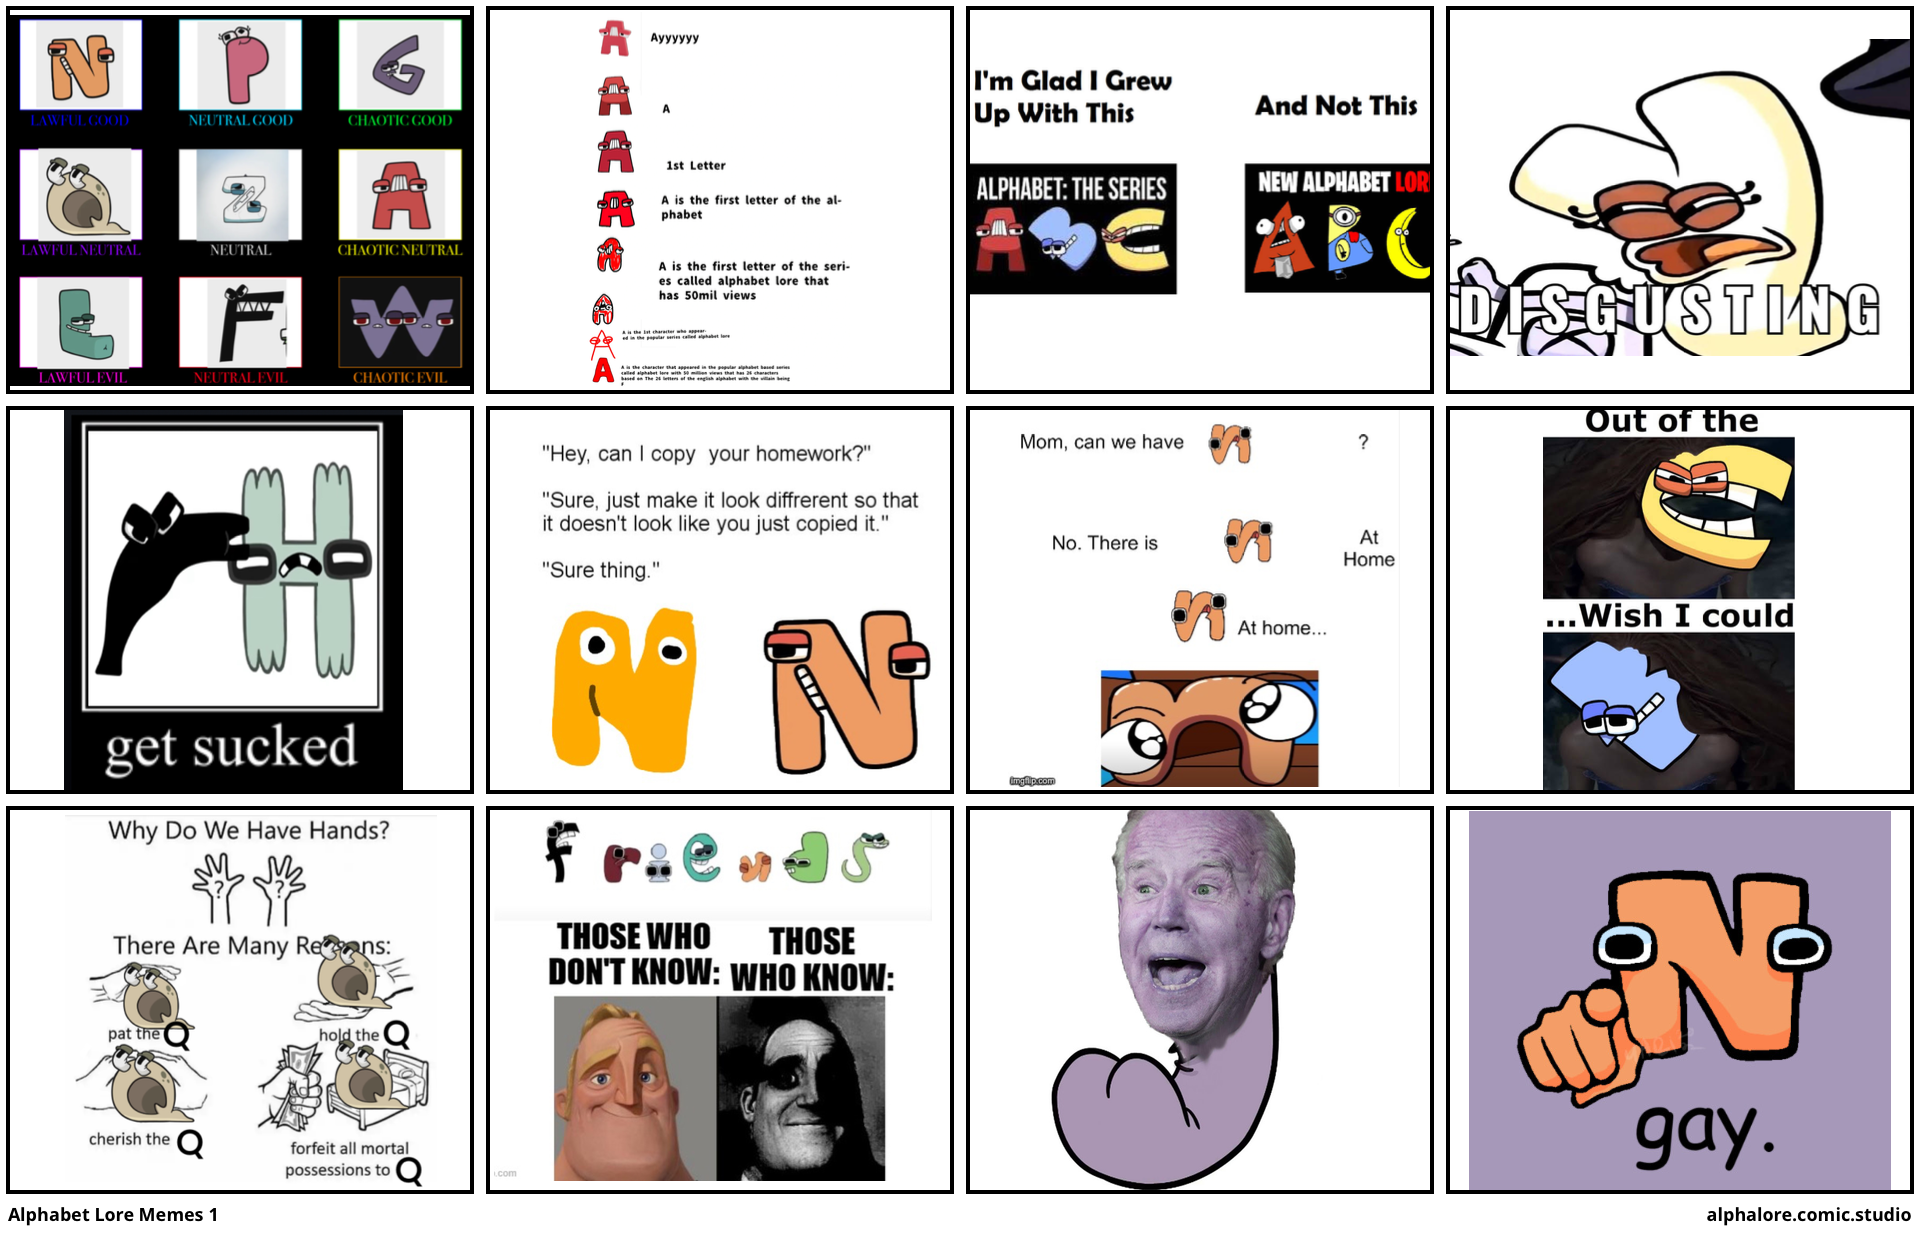 The alphabet lore memes 